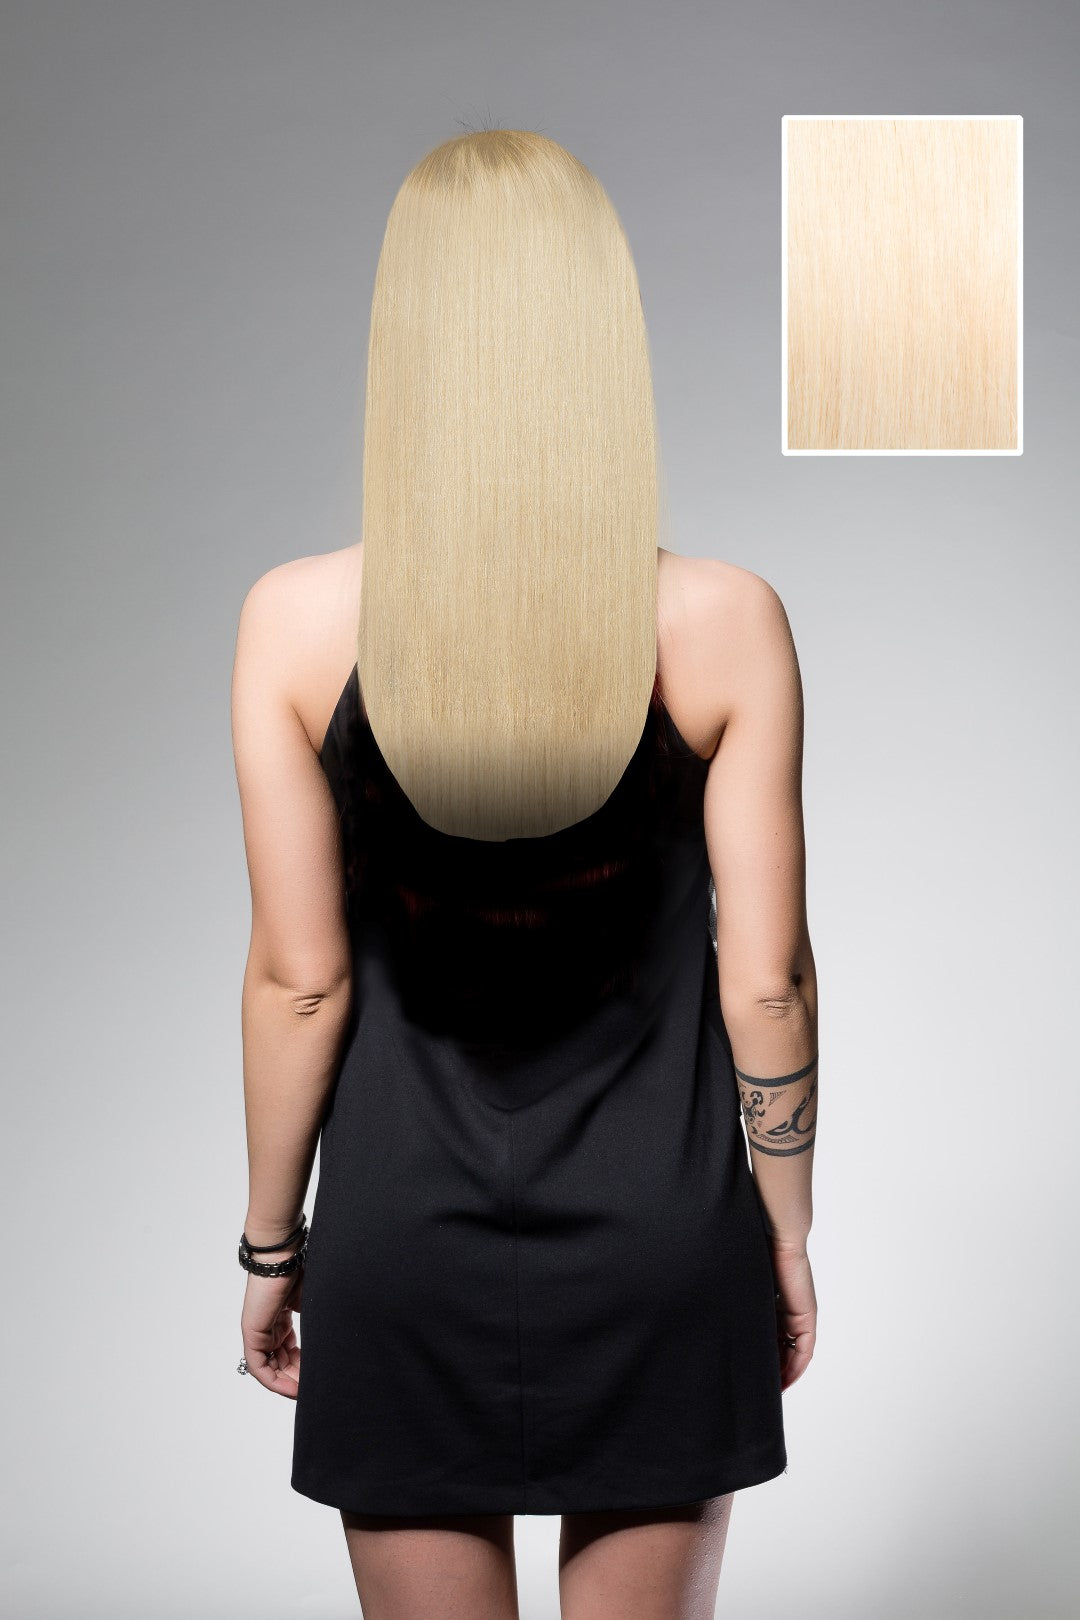 Blond Platine #613 - Kit Chevelure Complète - 35 cm